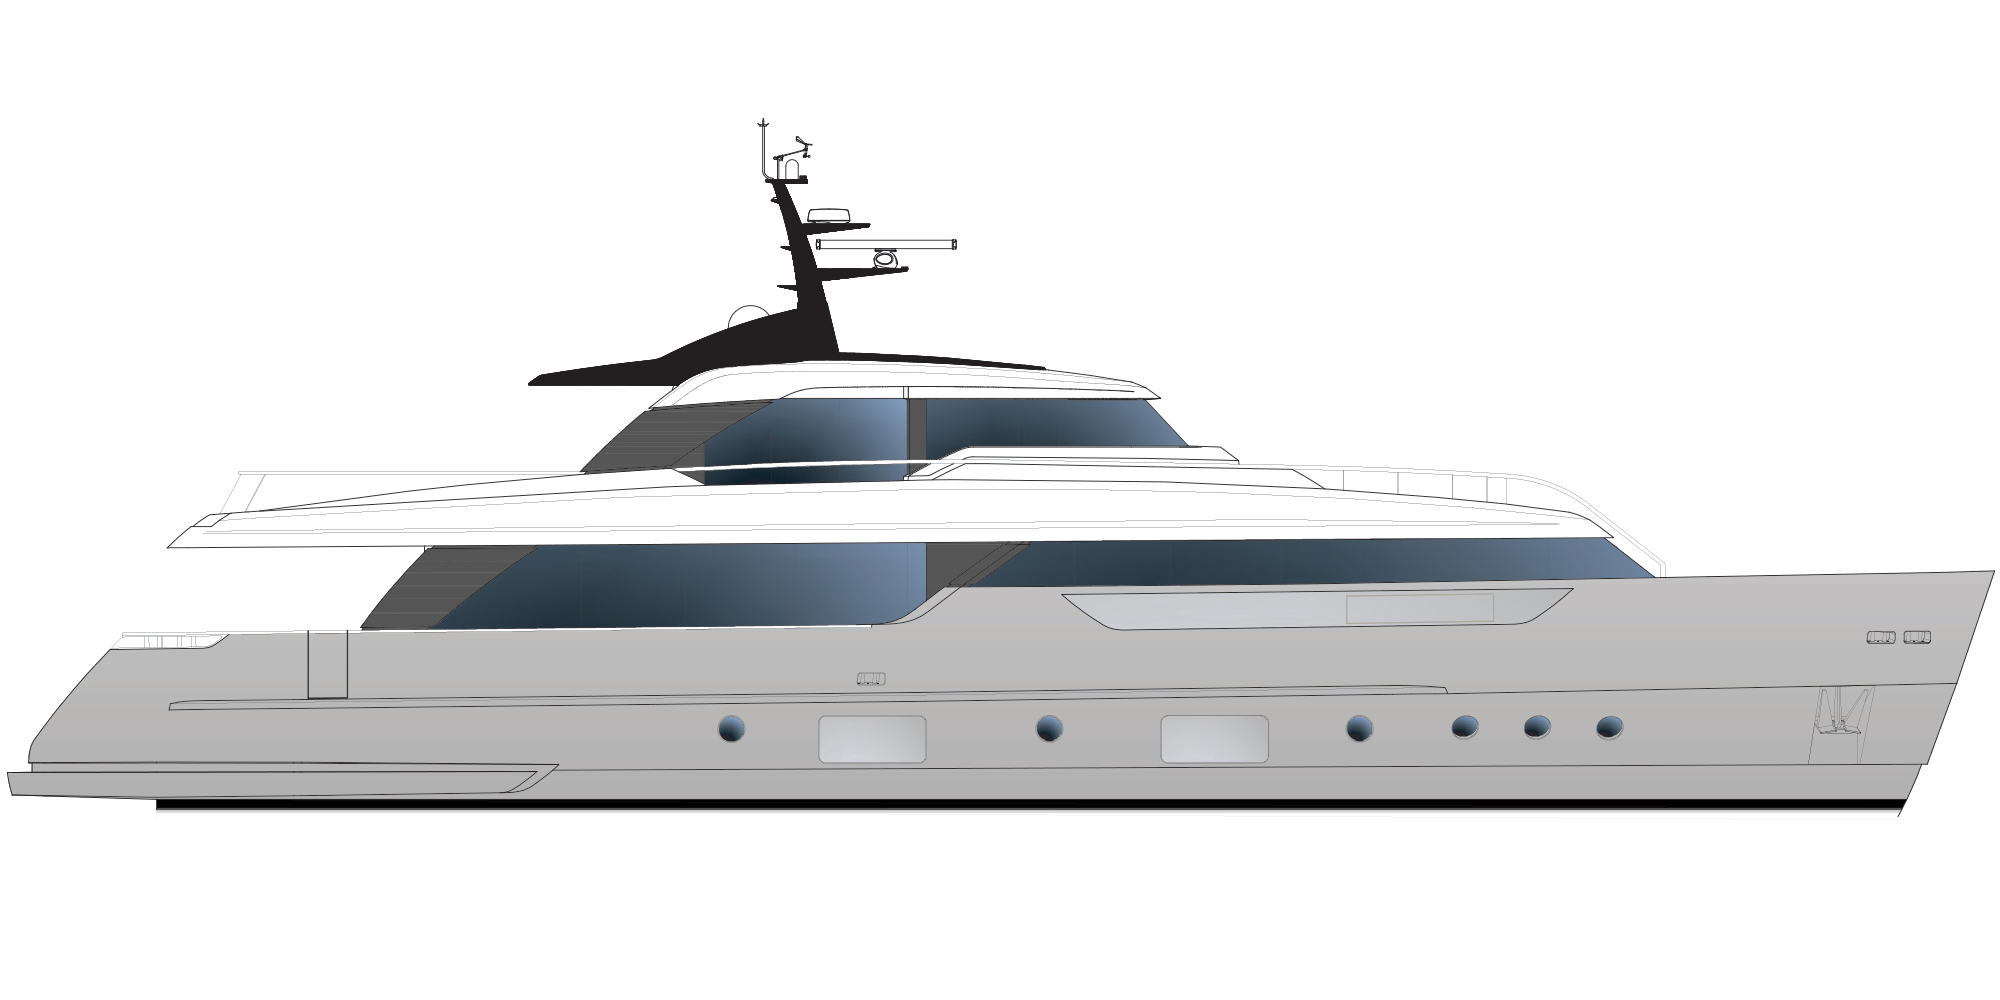 Sanlorenzo Yacht SD96 side profile